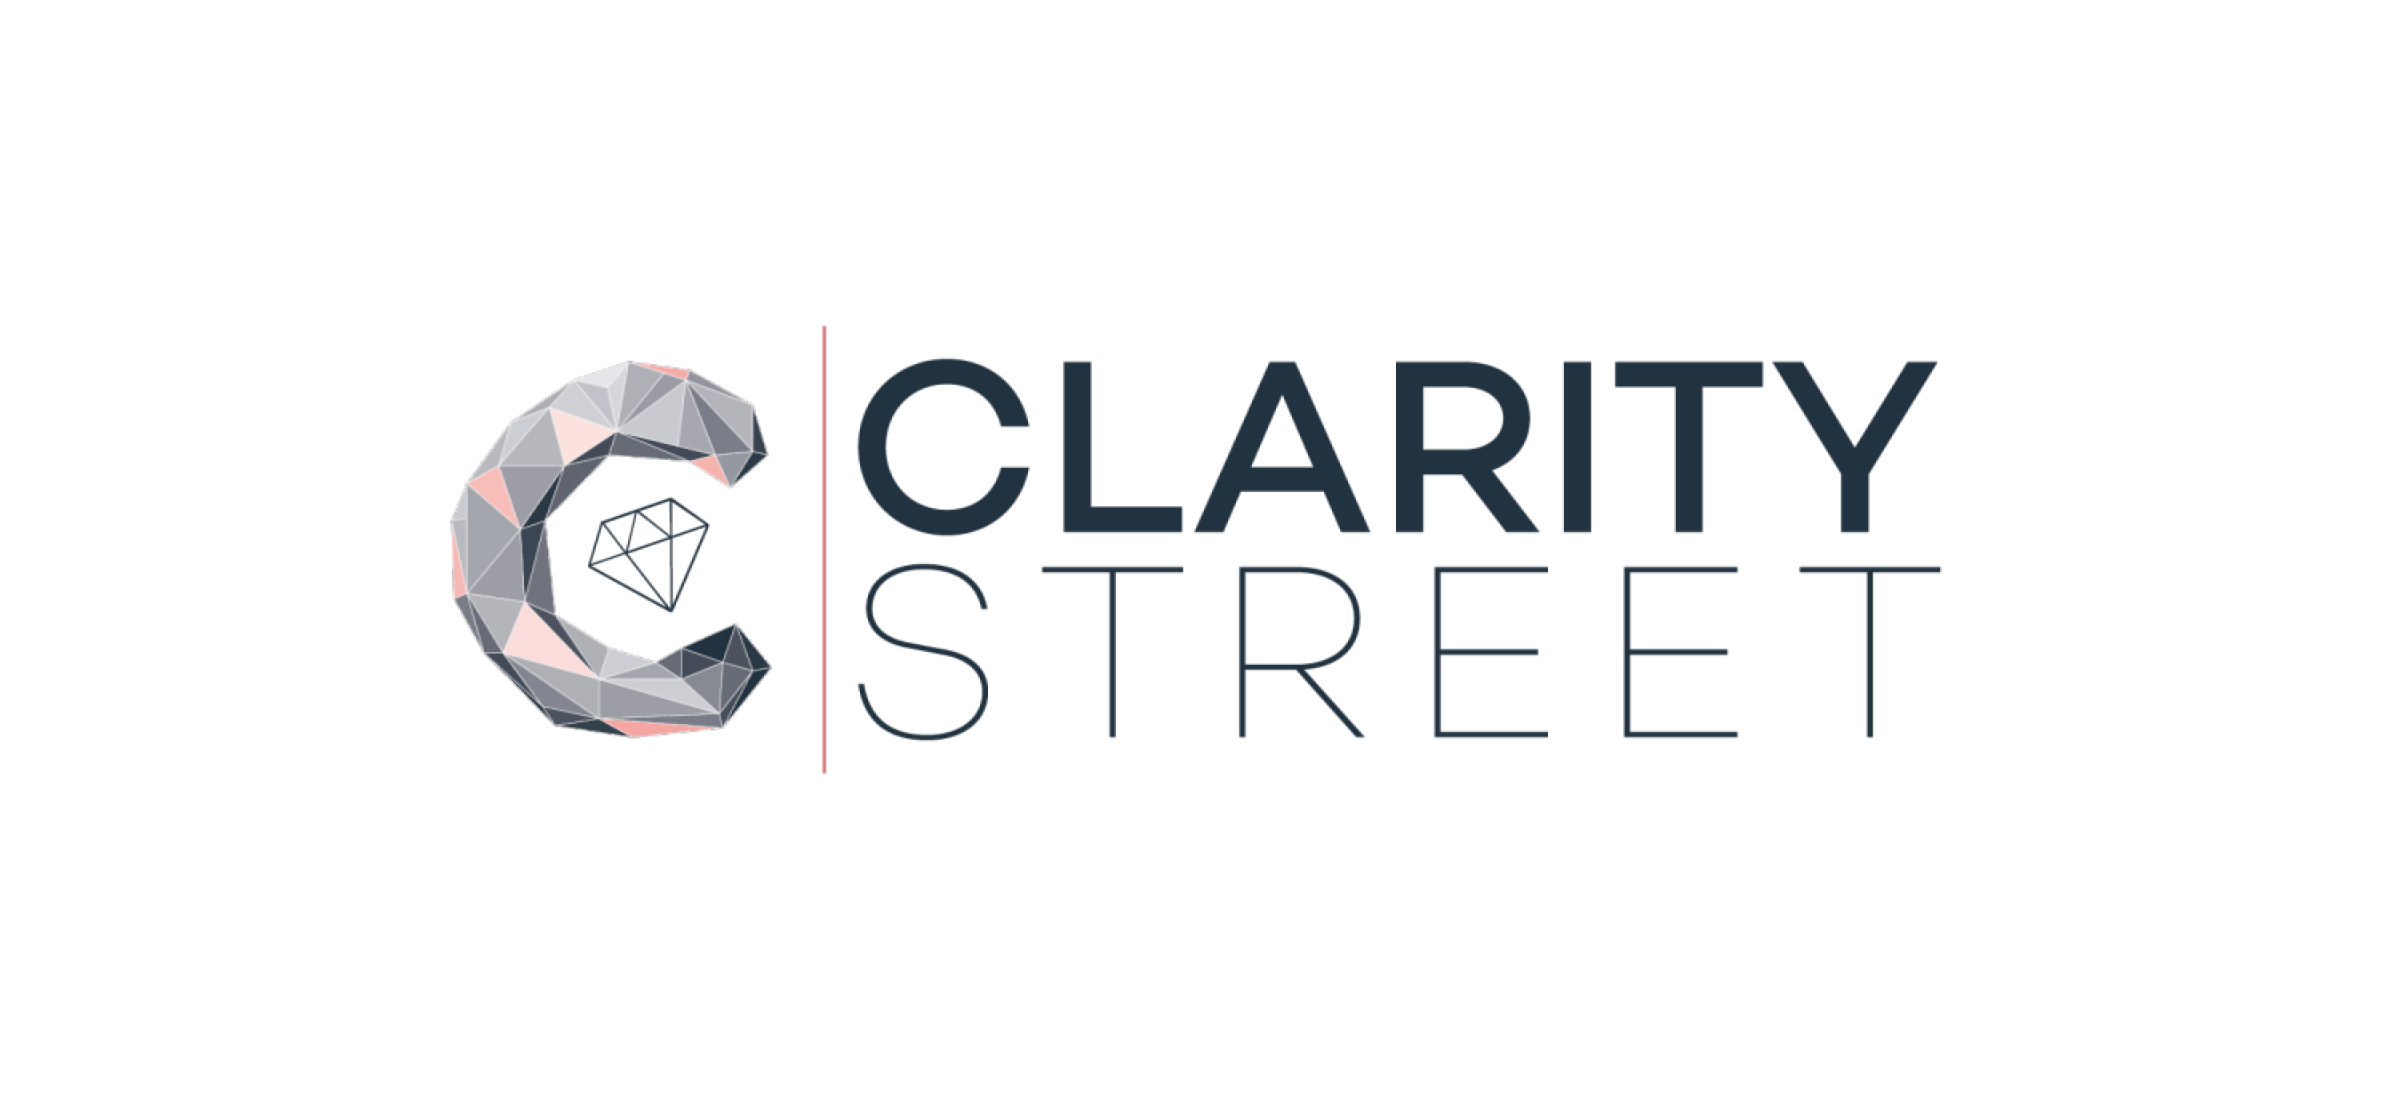 The Clarity Street logo